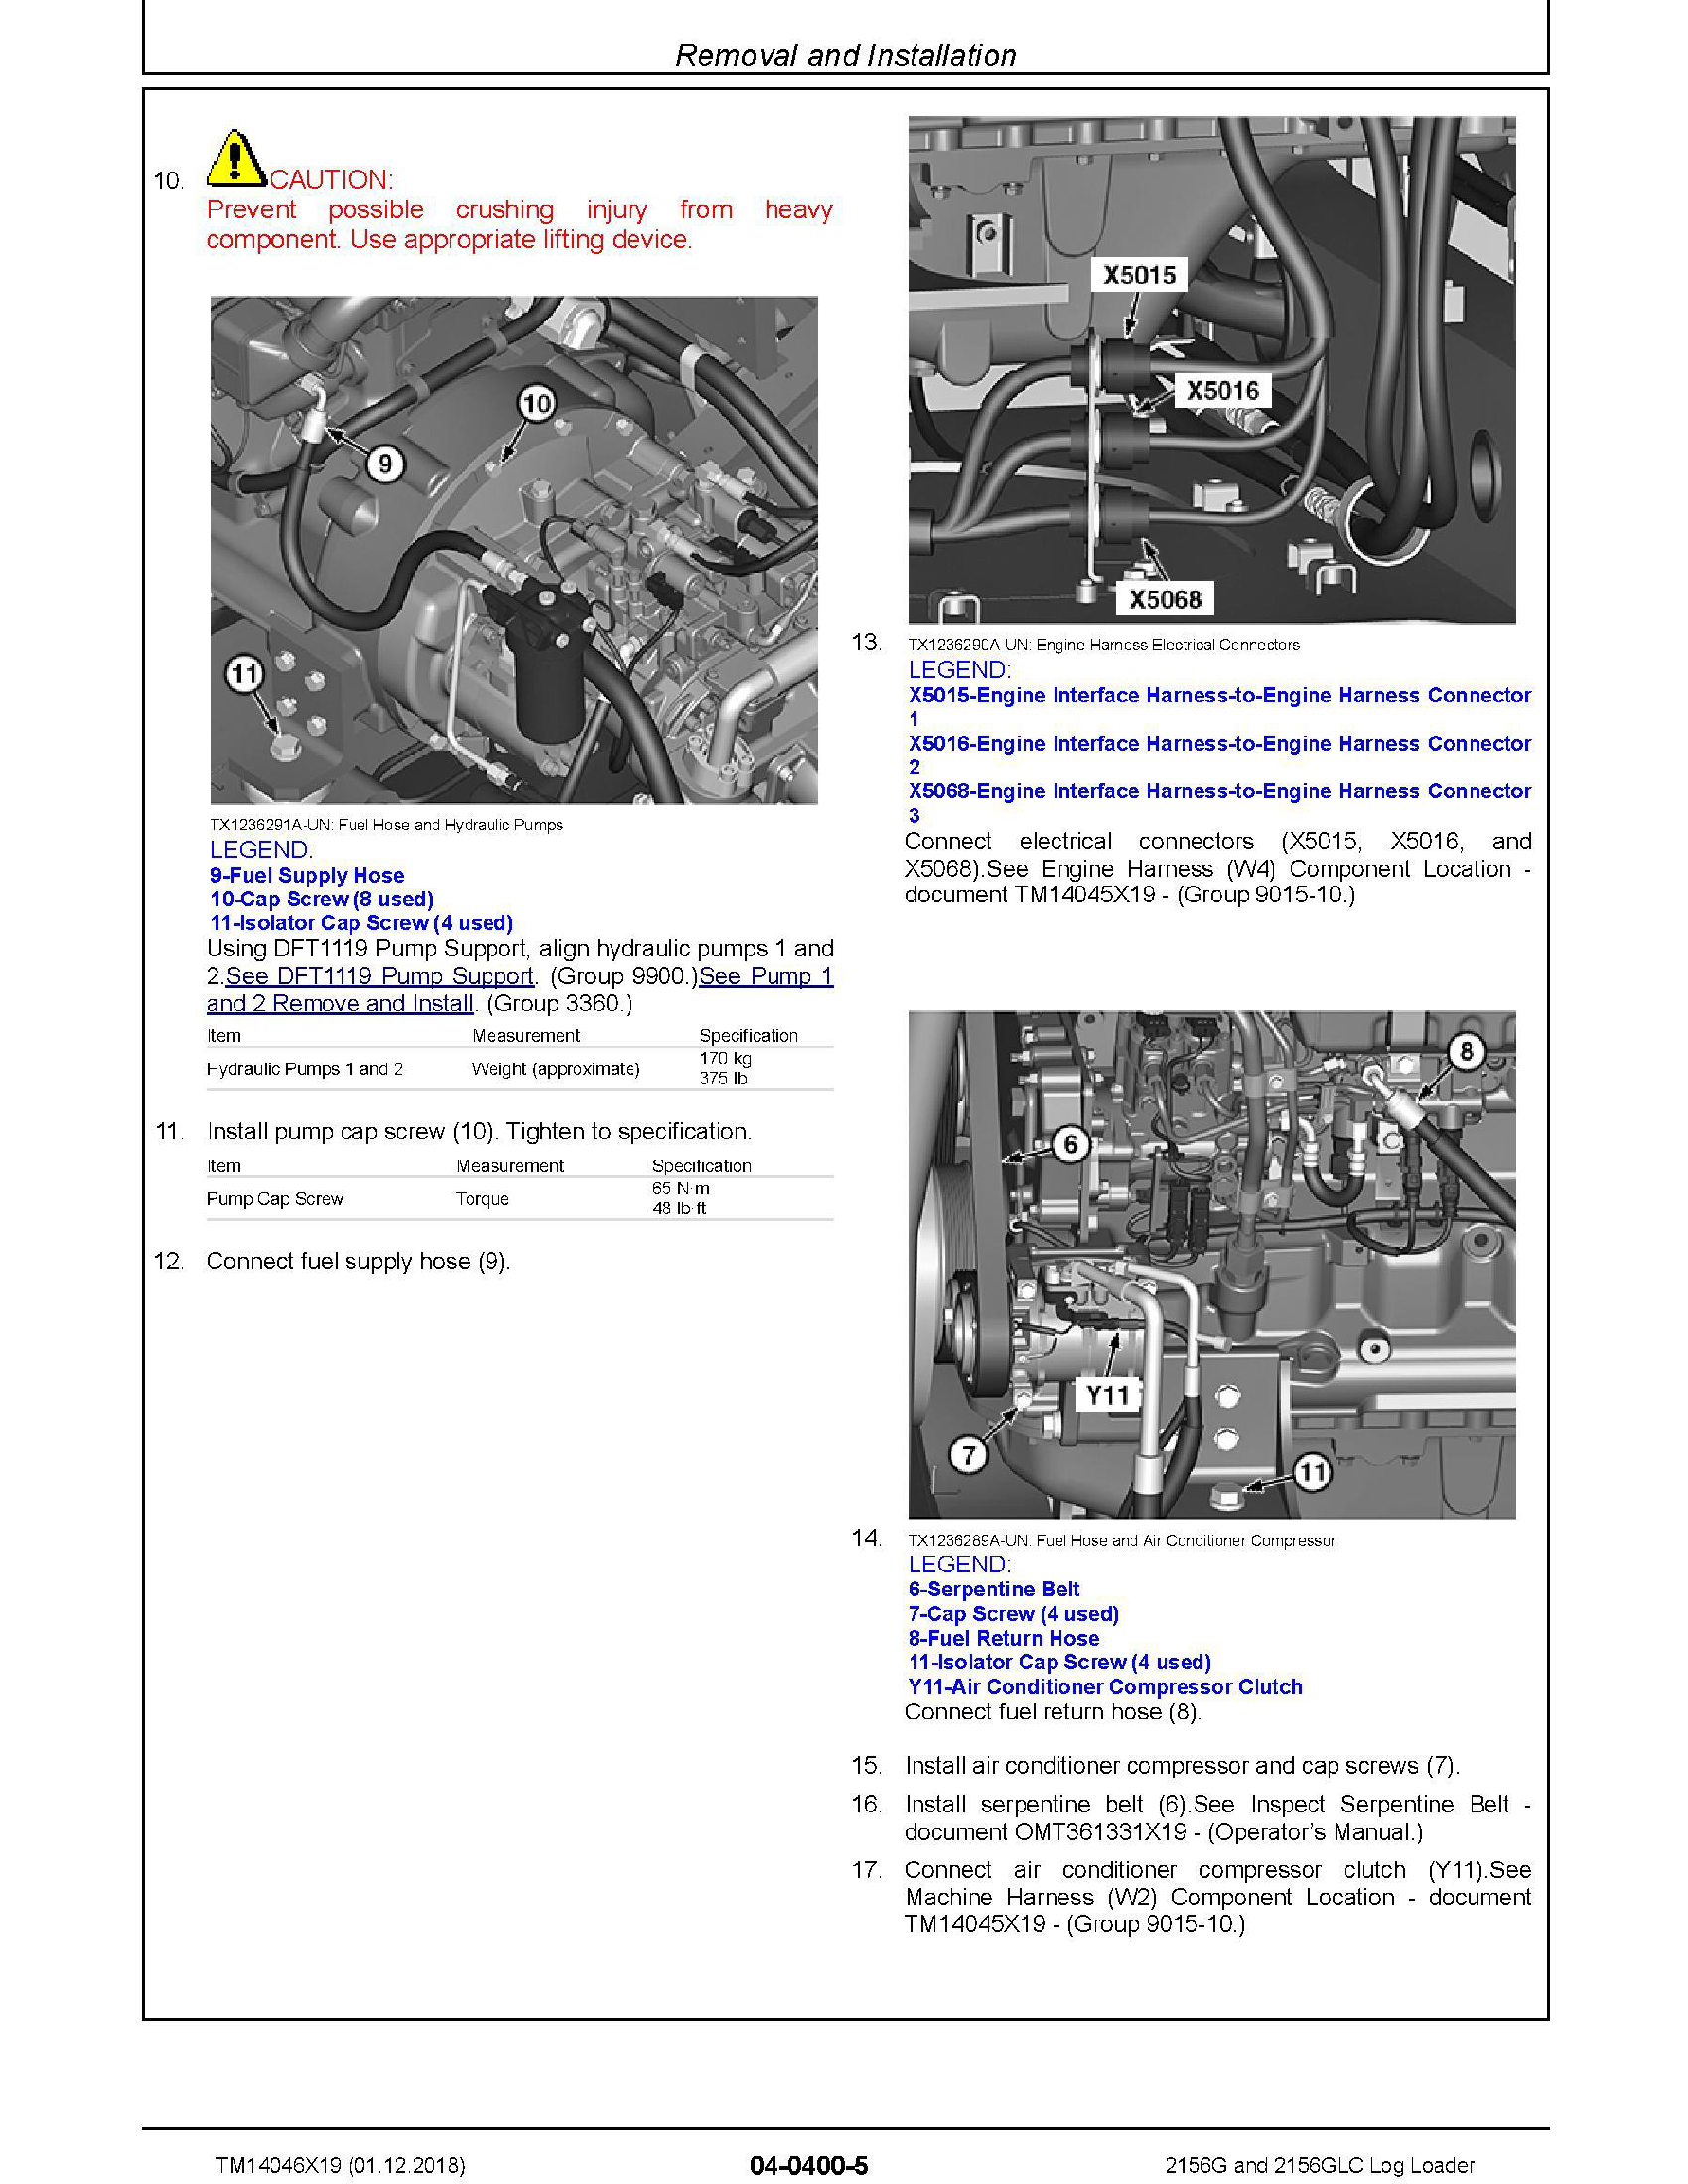 John Deere 748L manual pdf